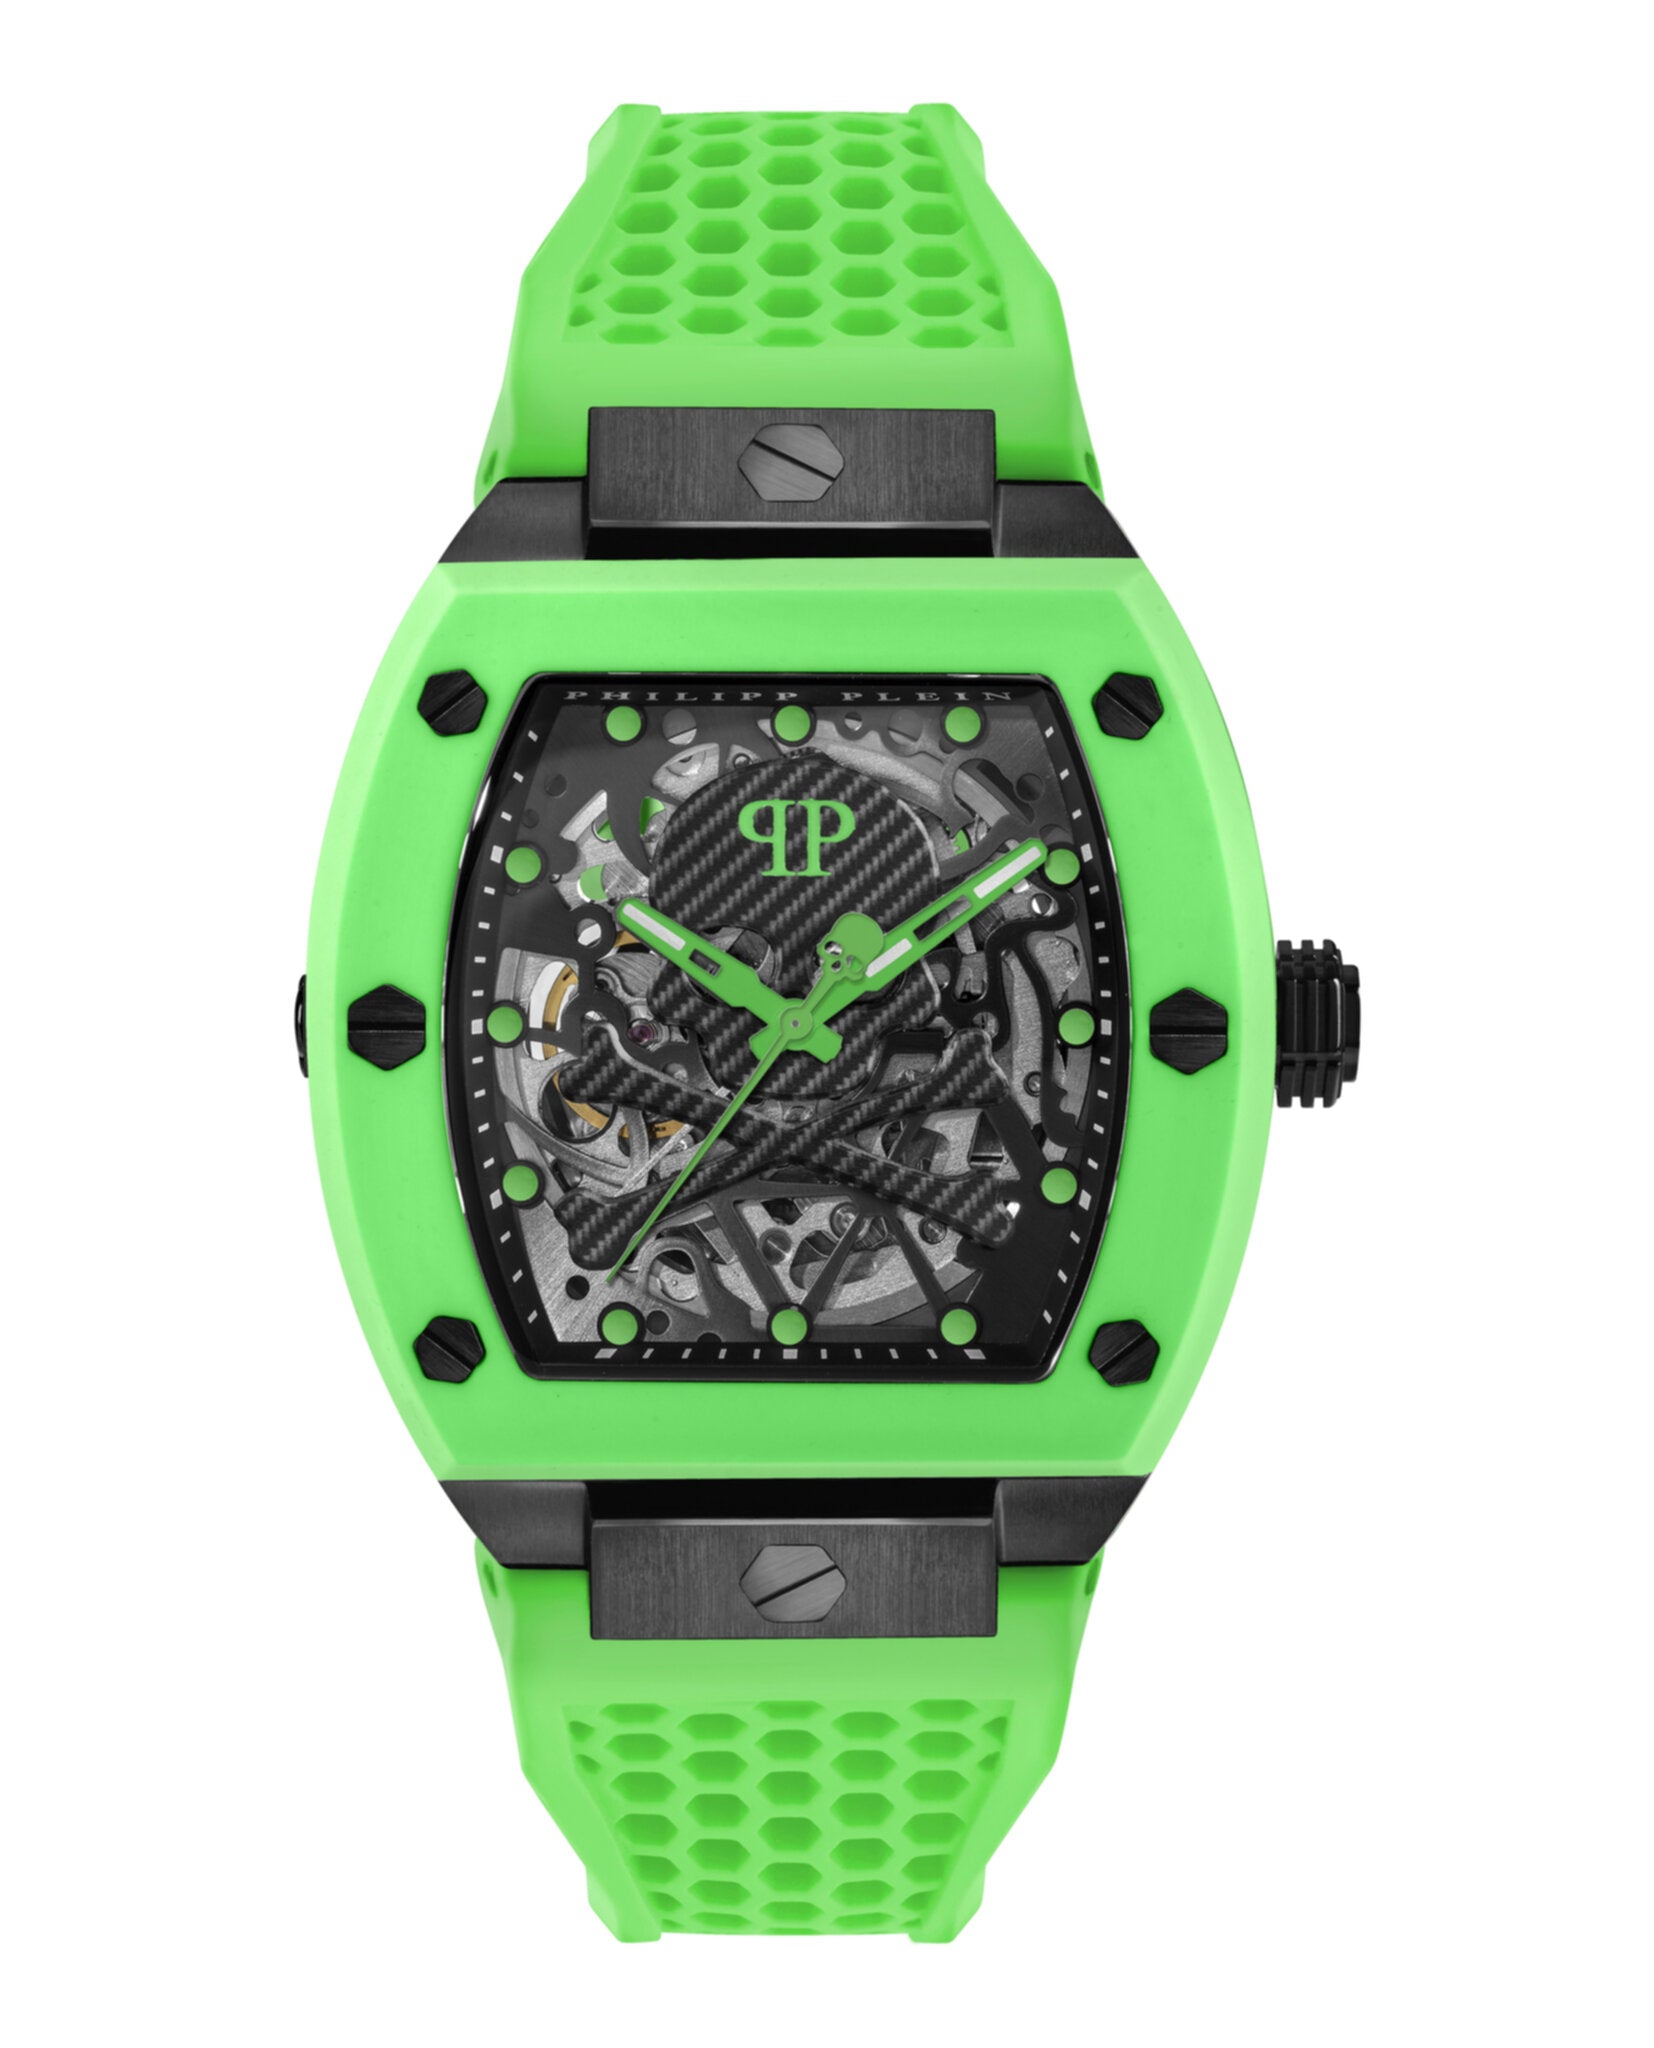 The $keleton Automatic Watch